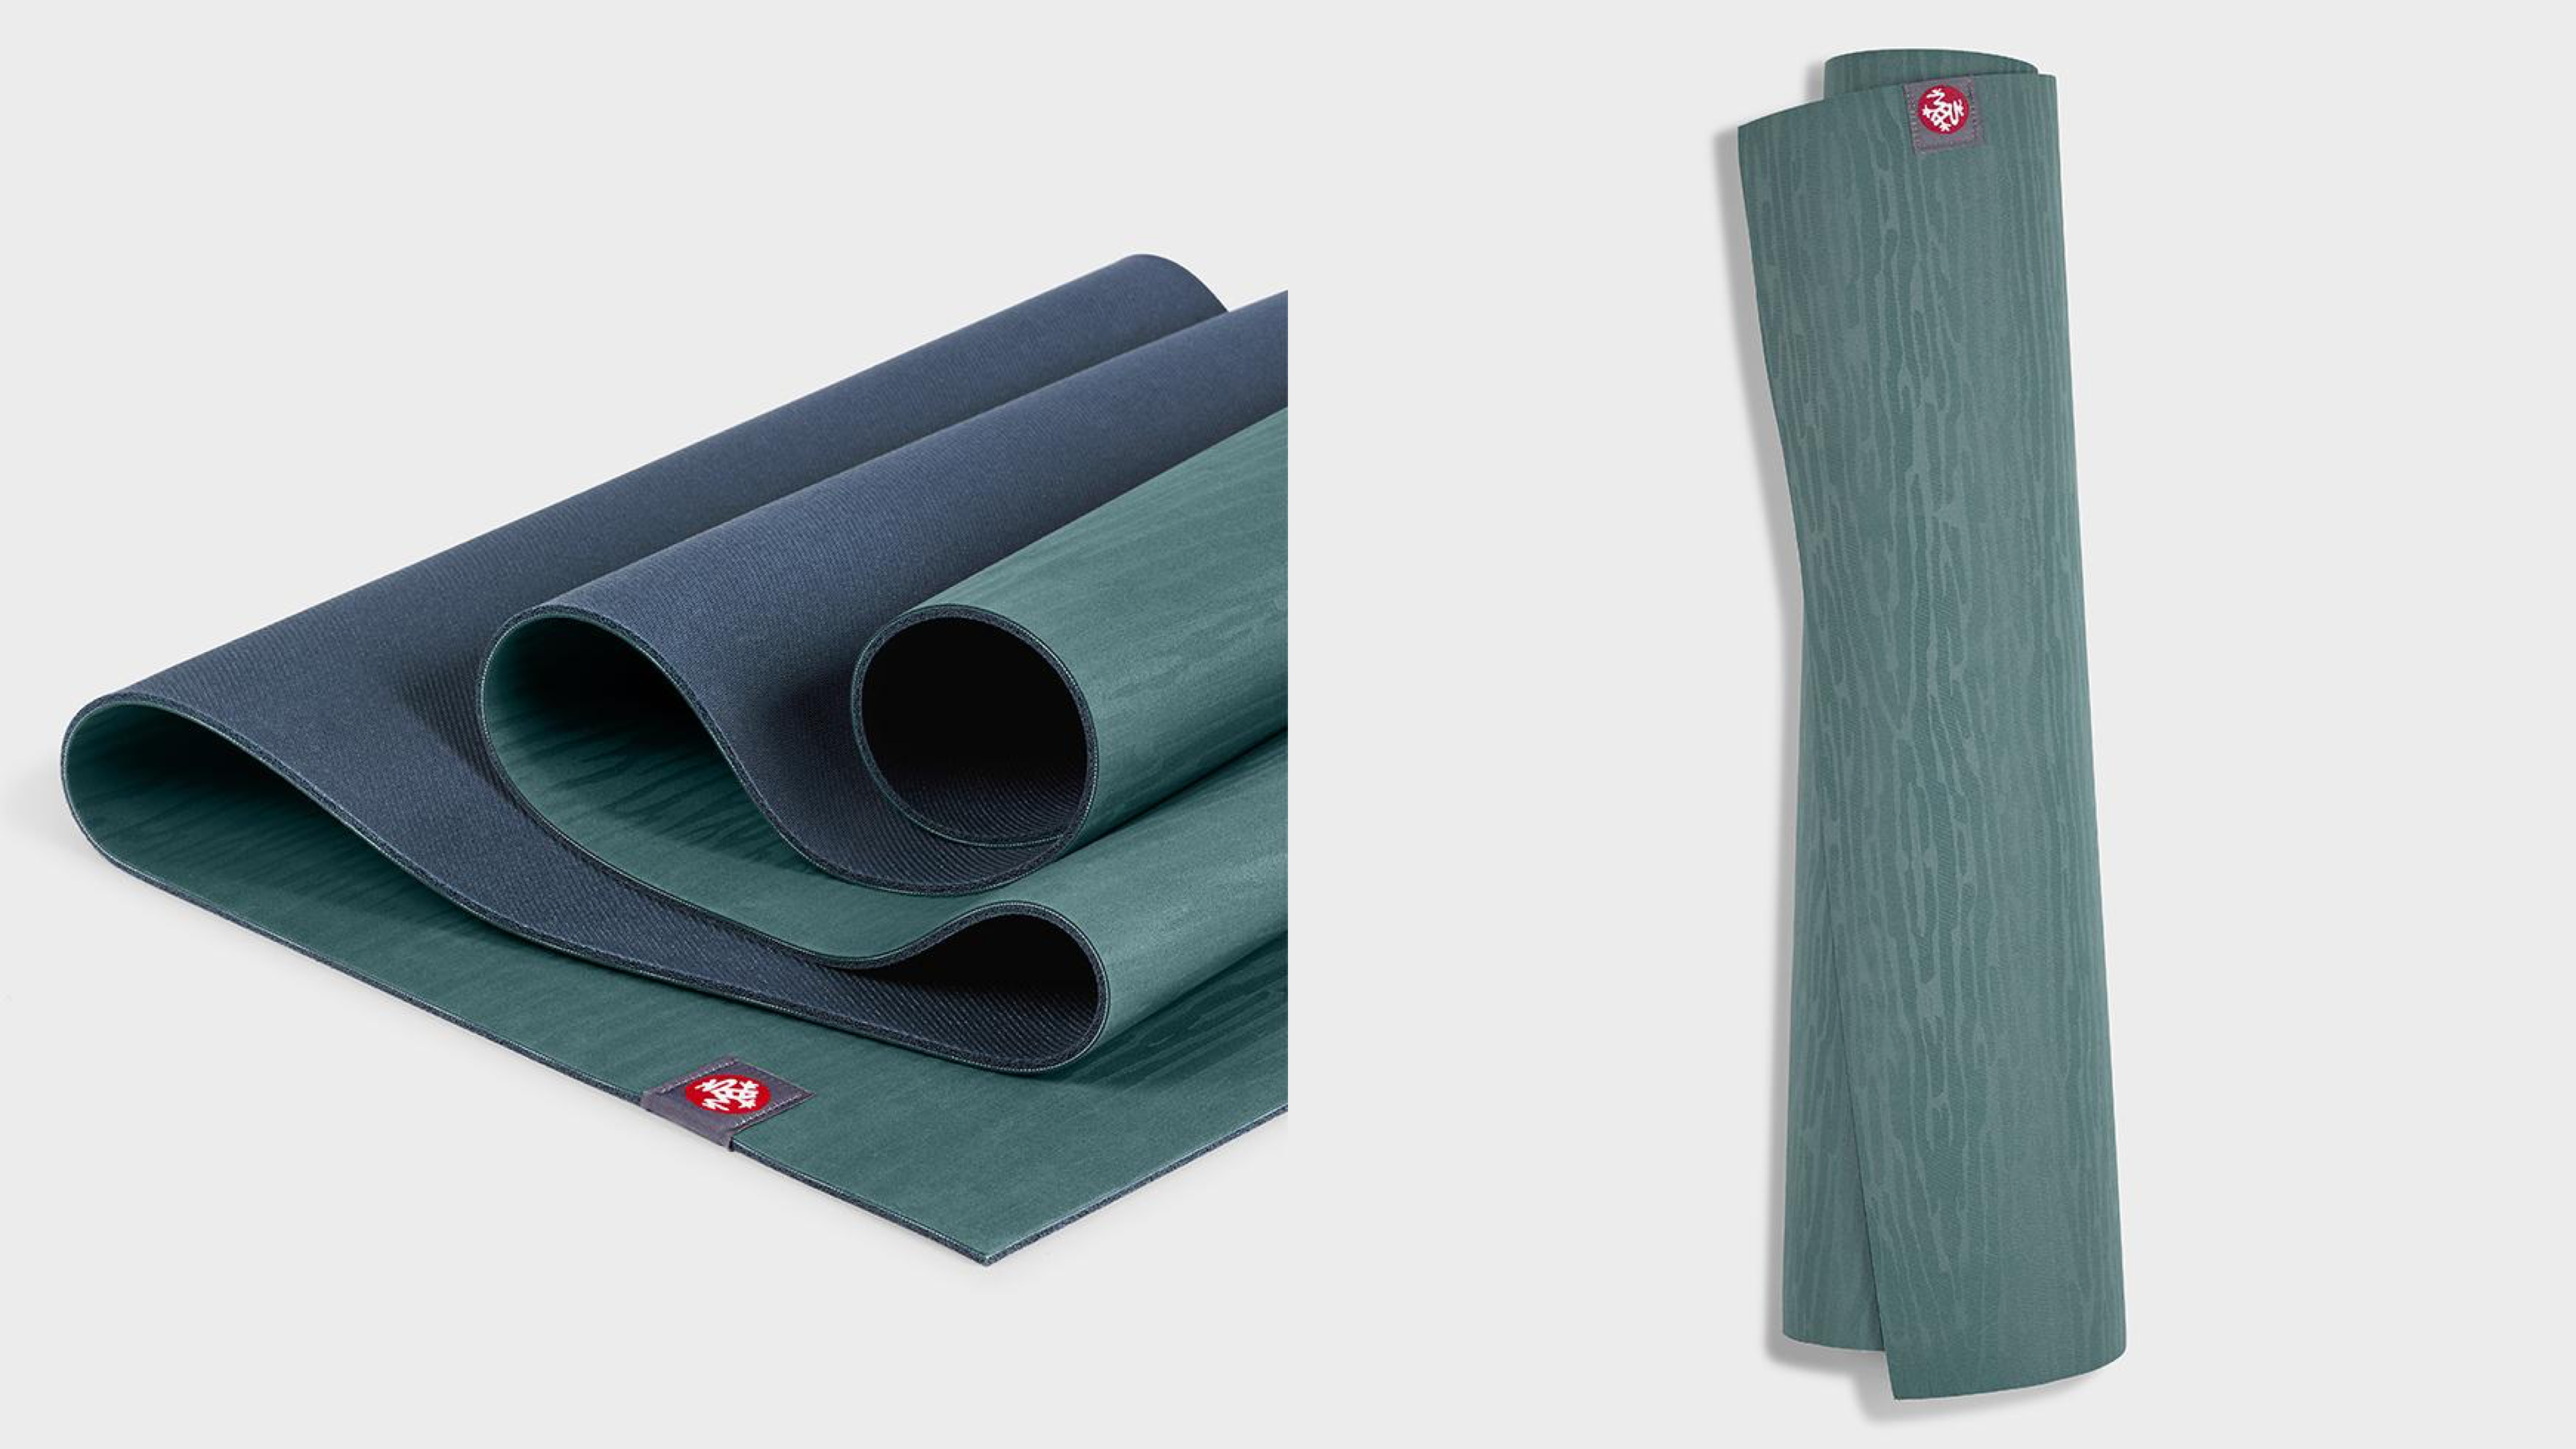 plant-based yoga mat that's biodegradable